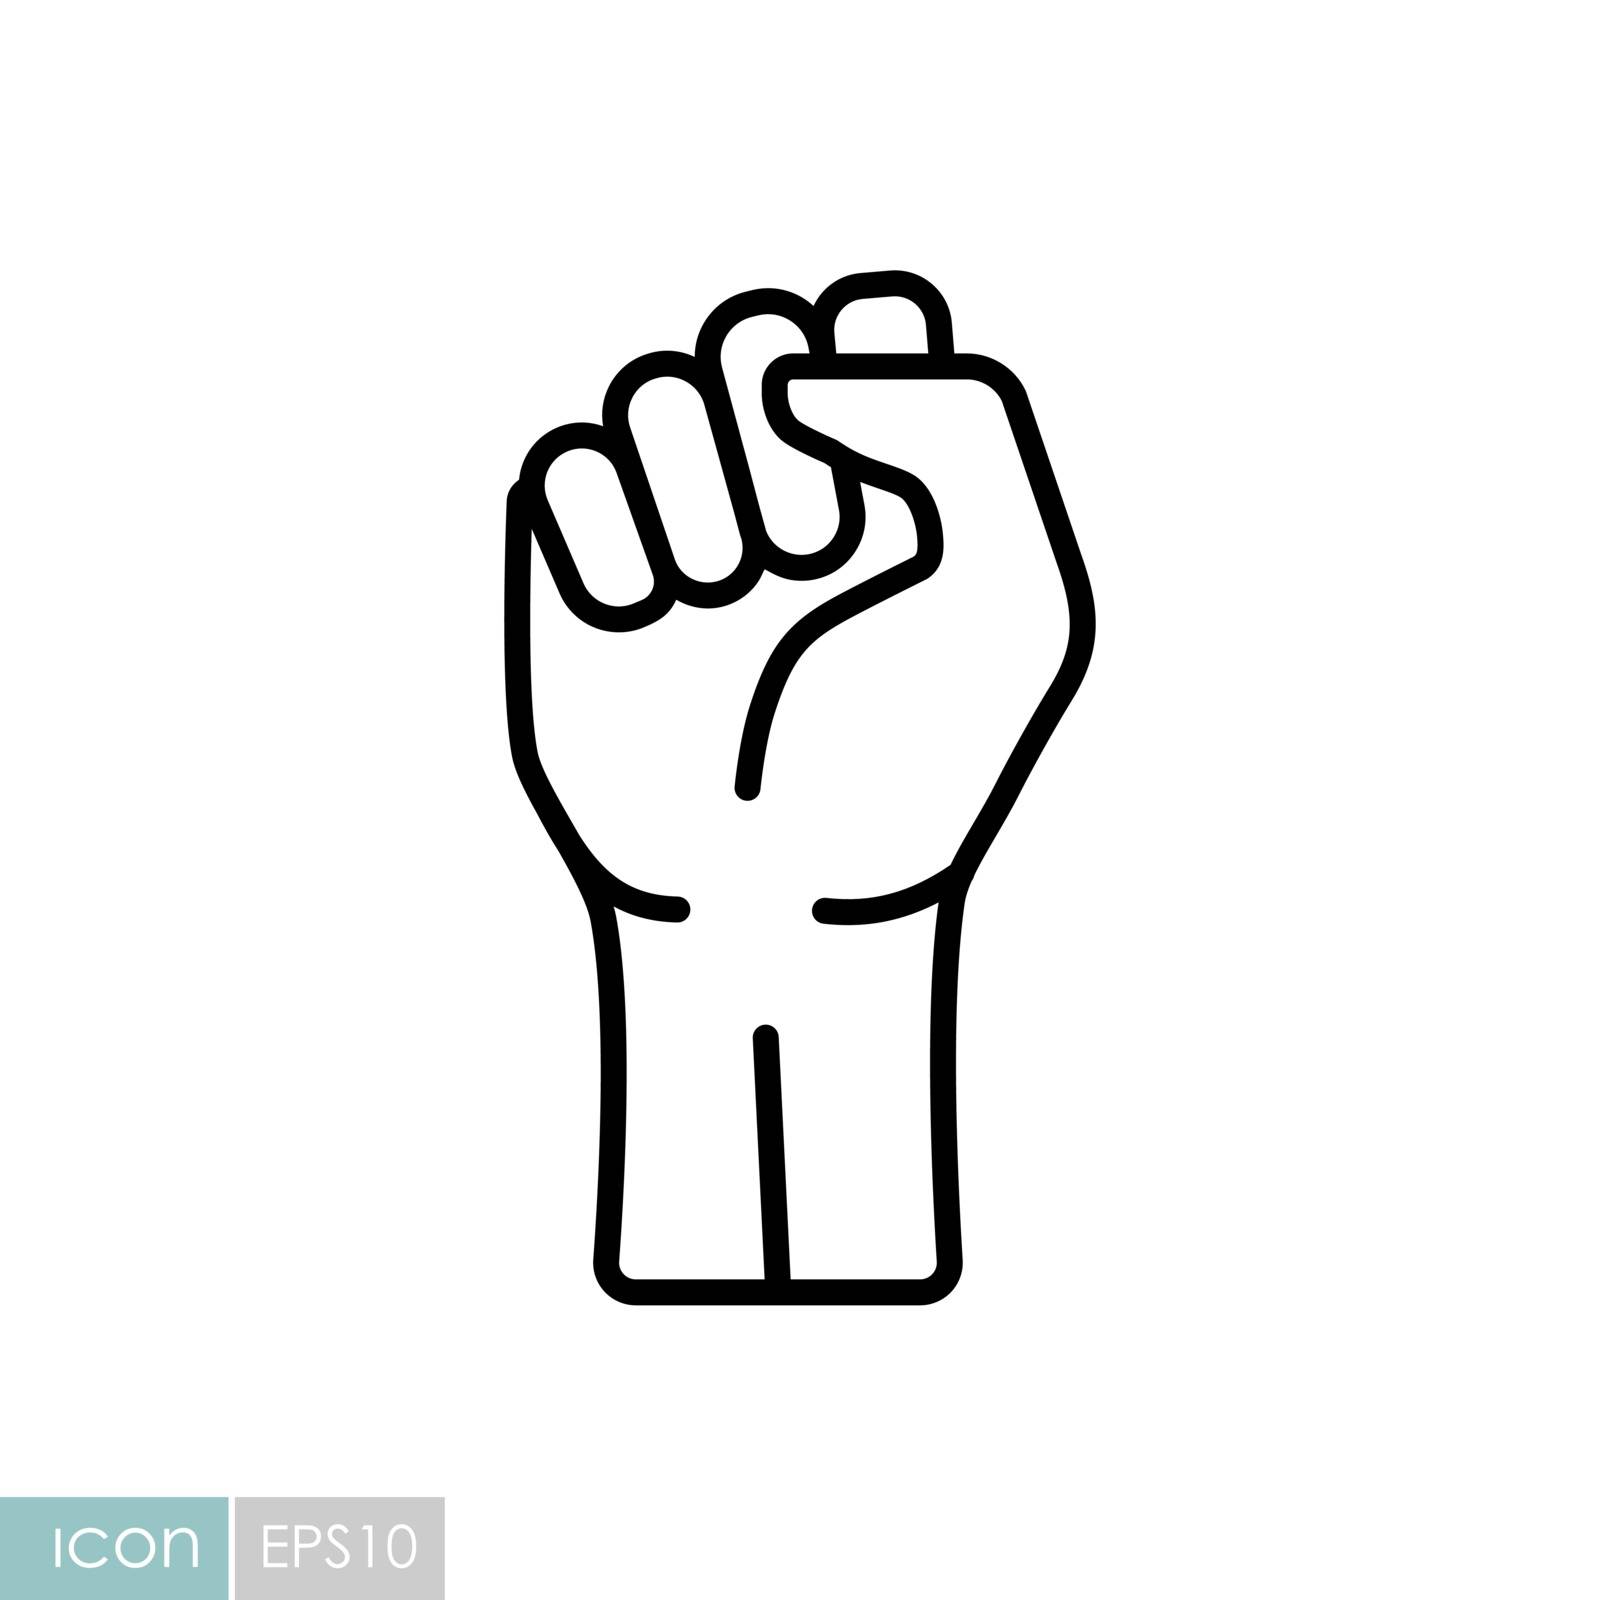 Fist raised up vector icon. Demonstration, manifestation, protest, strike, revolution